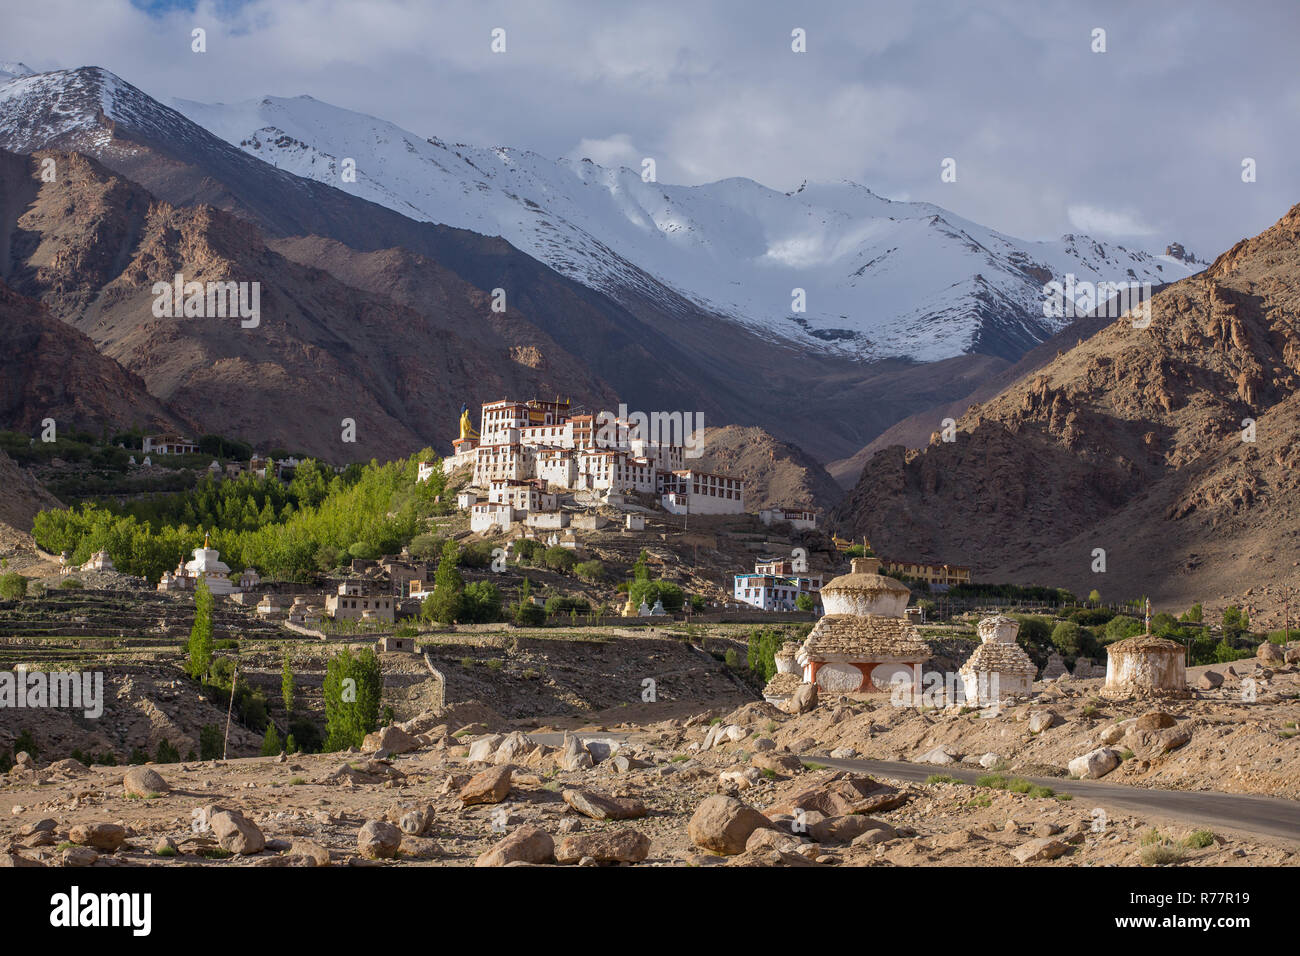 Likir monastery in Ladakh, India Stock Photo